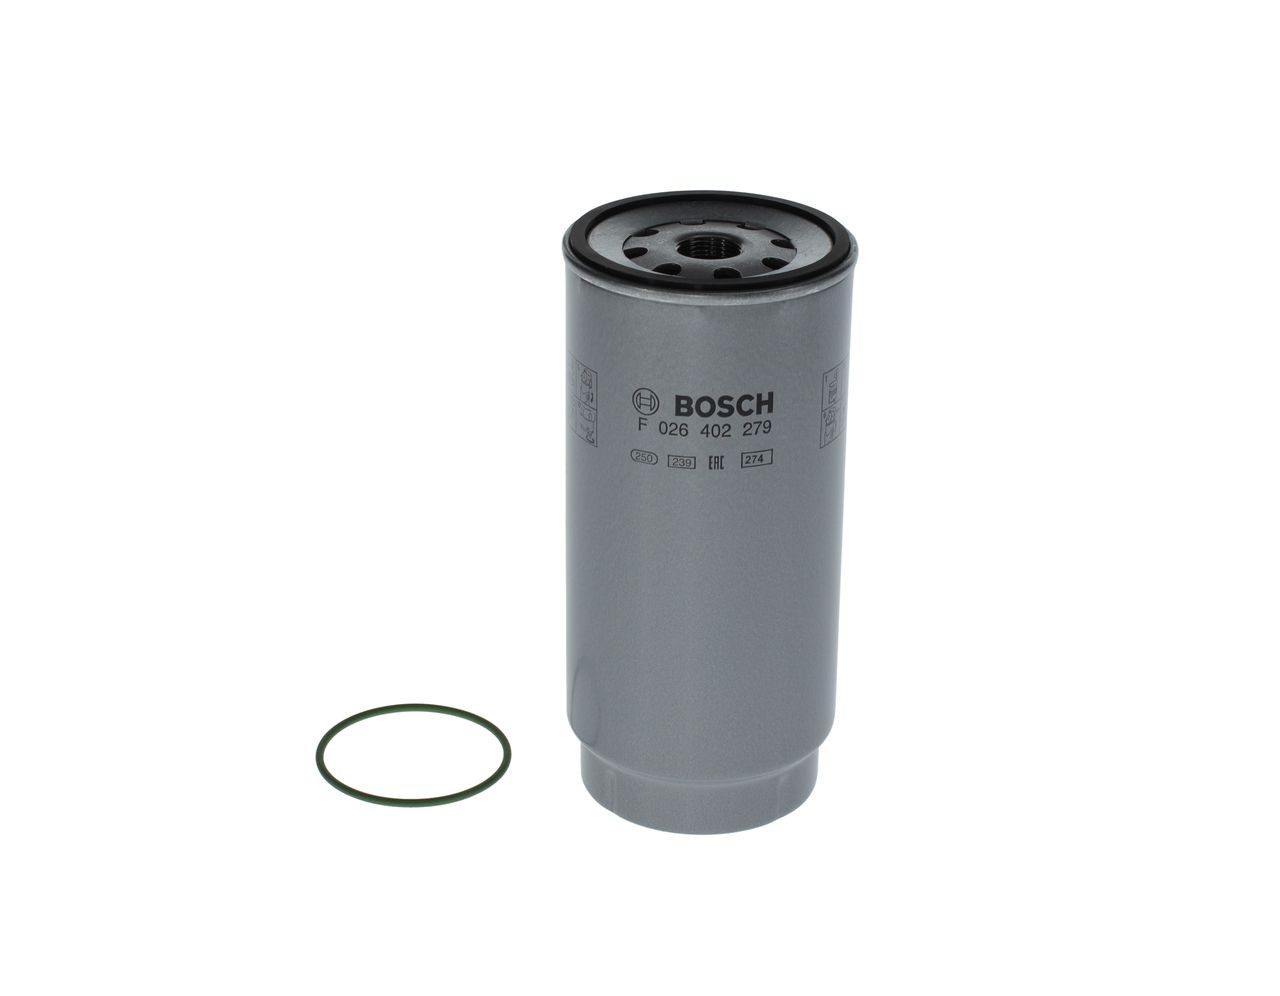 BOSCH F026402279 Fuel filters Spin-on Filter, Pre-Filter